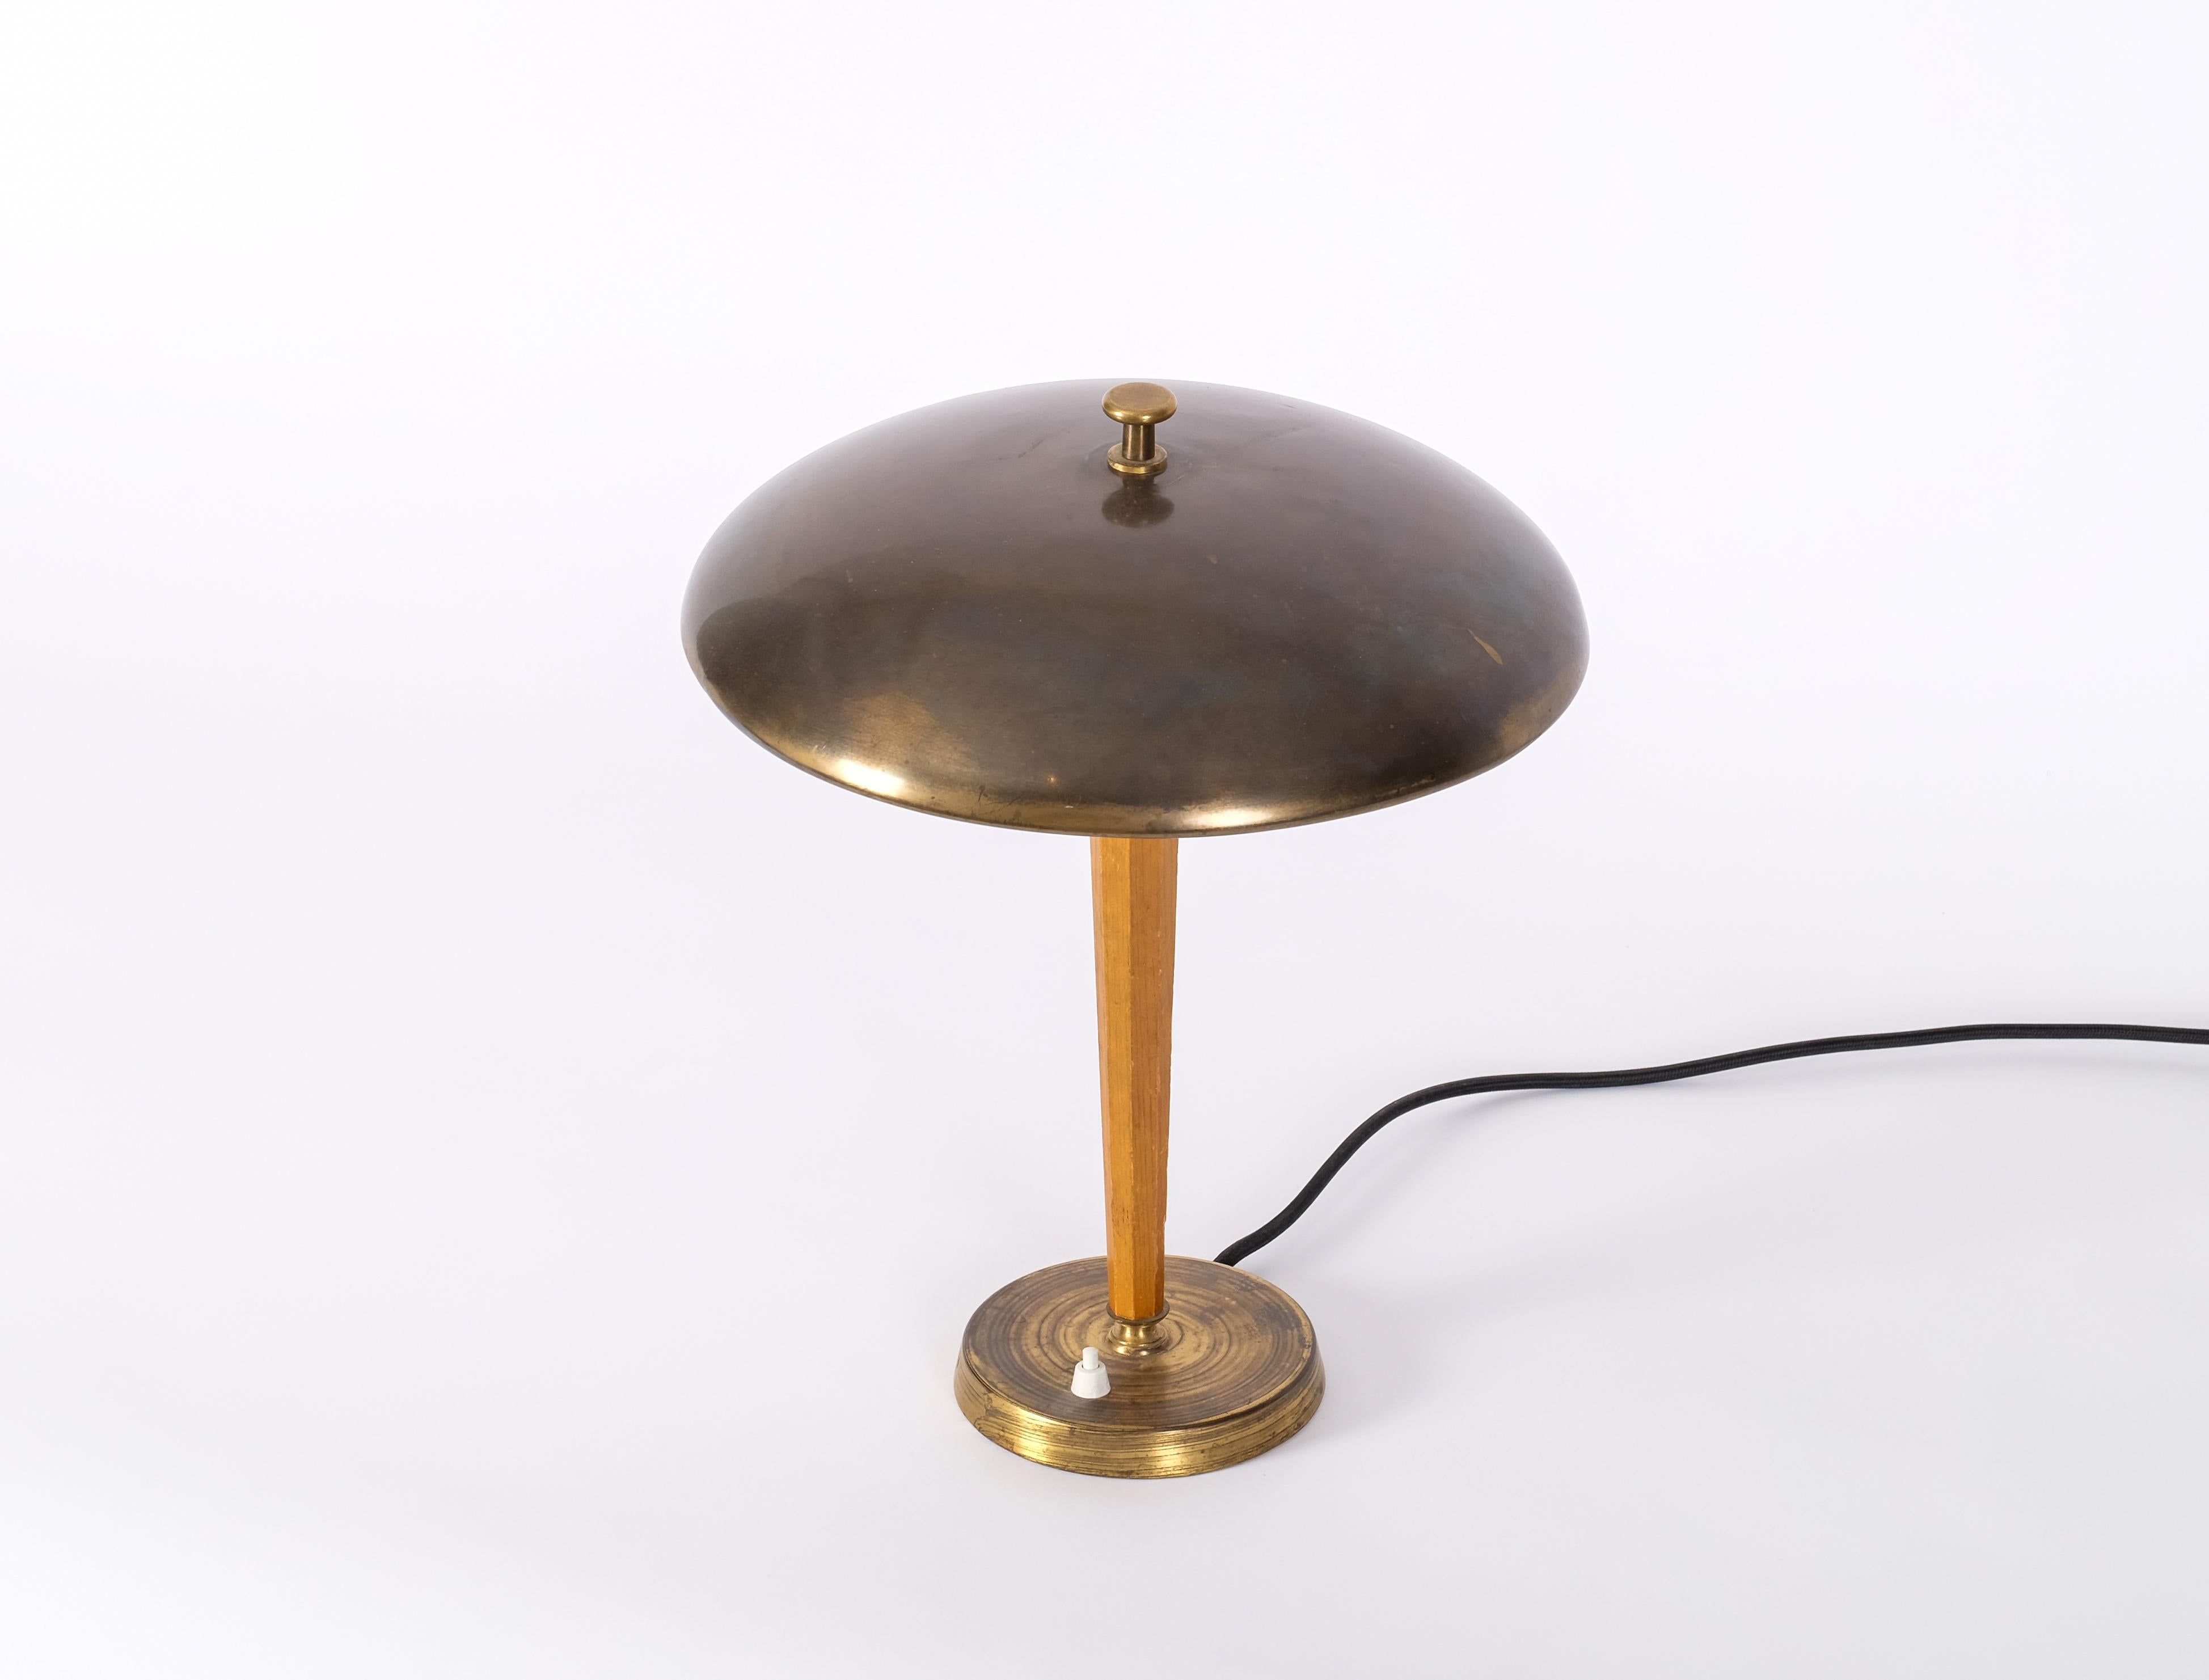 Scandinavian Modern Bertil Brisborg Table Lamp, Sweden, 1940s For Sale